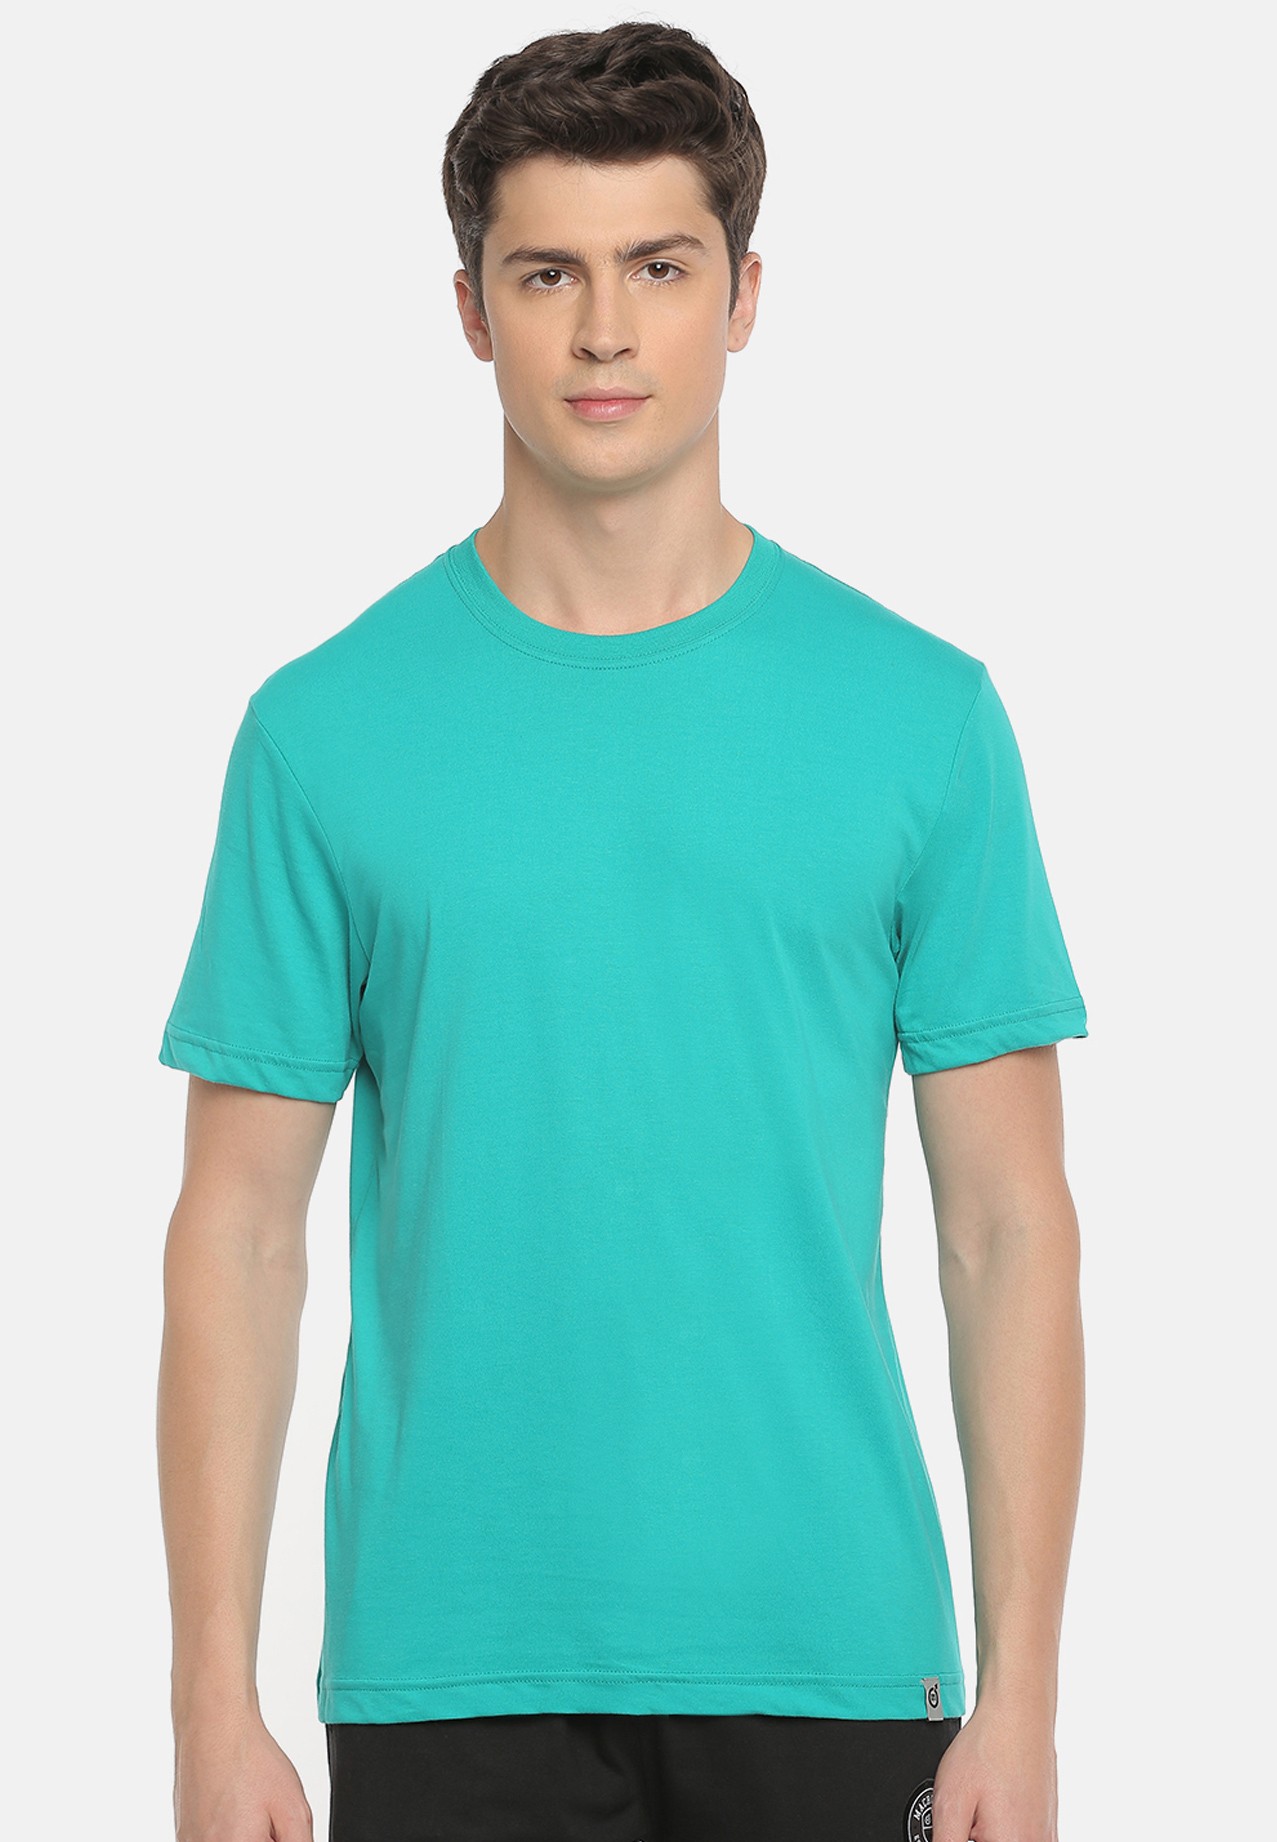 Elbow Sleeve Notch Neck Shirttail Hem Top – Geyermans Clothing Co.